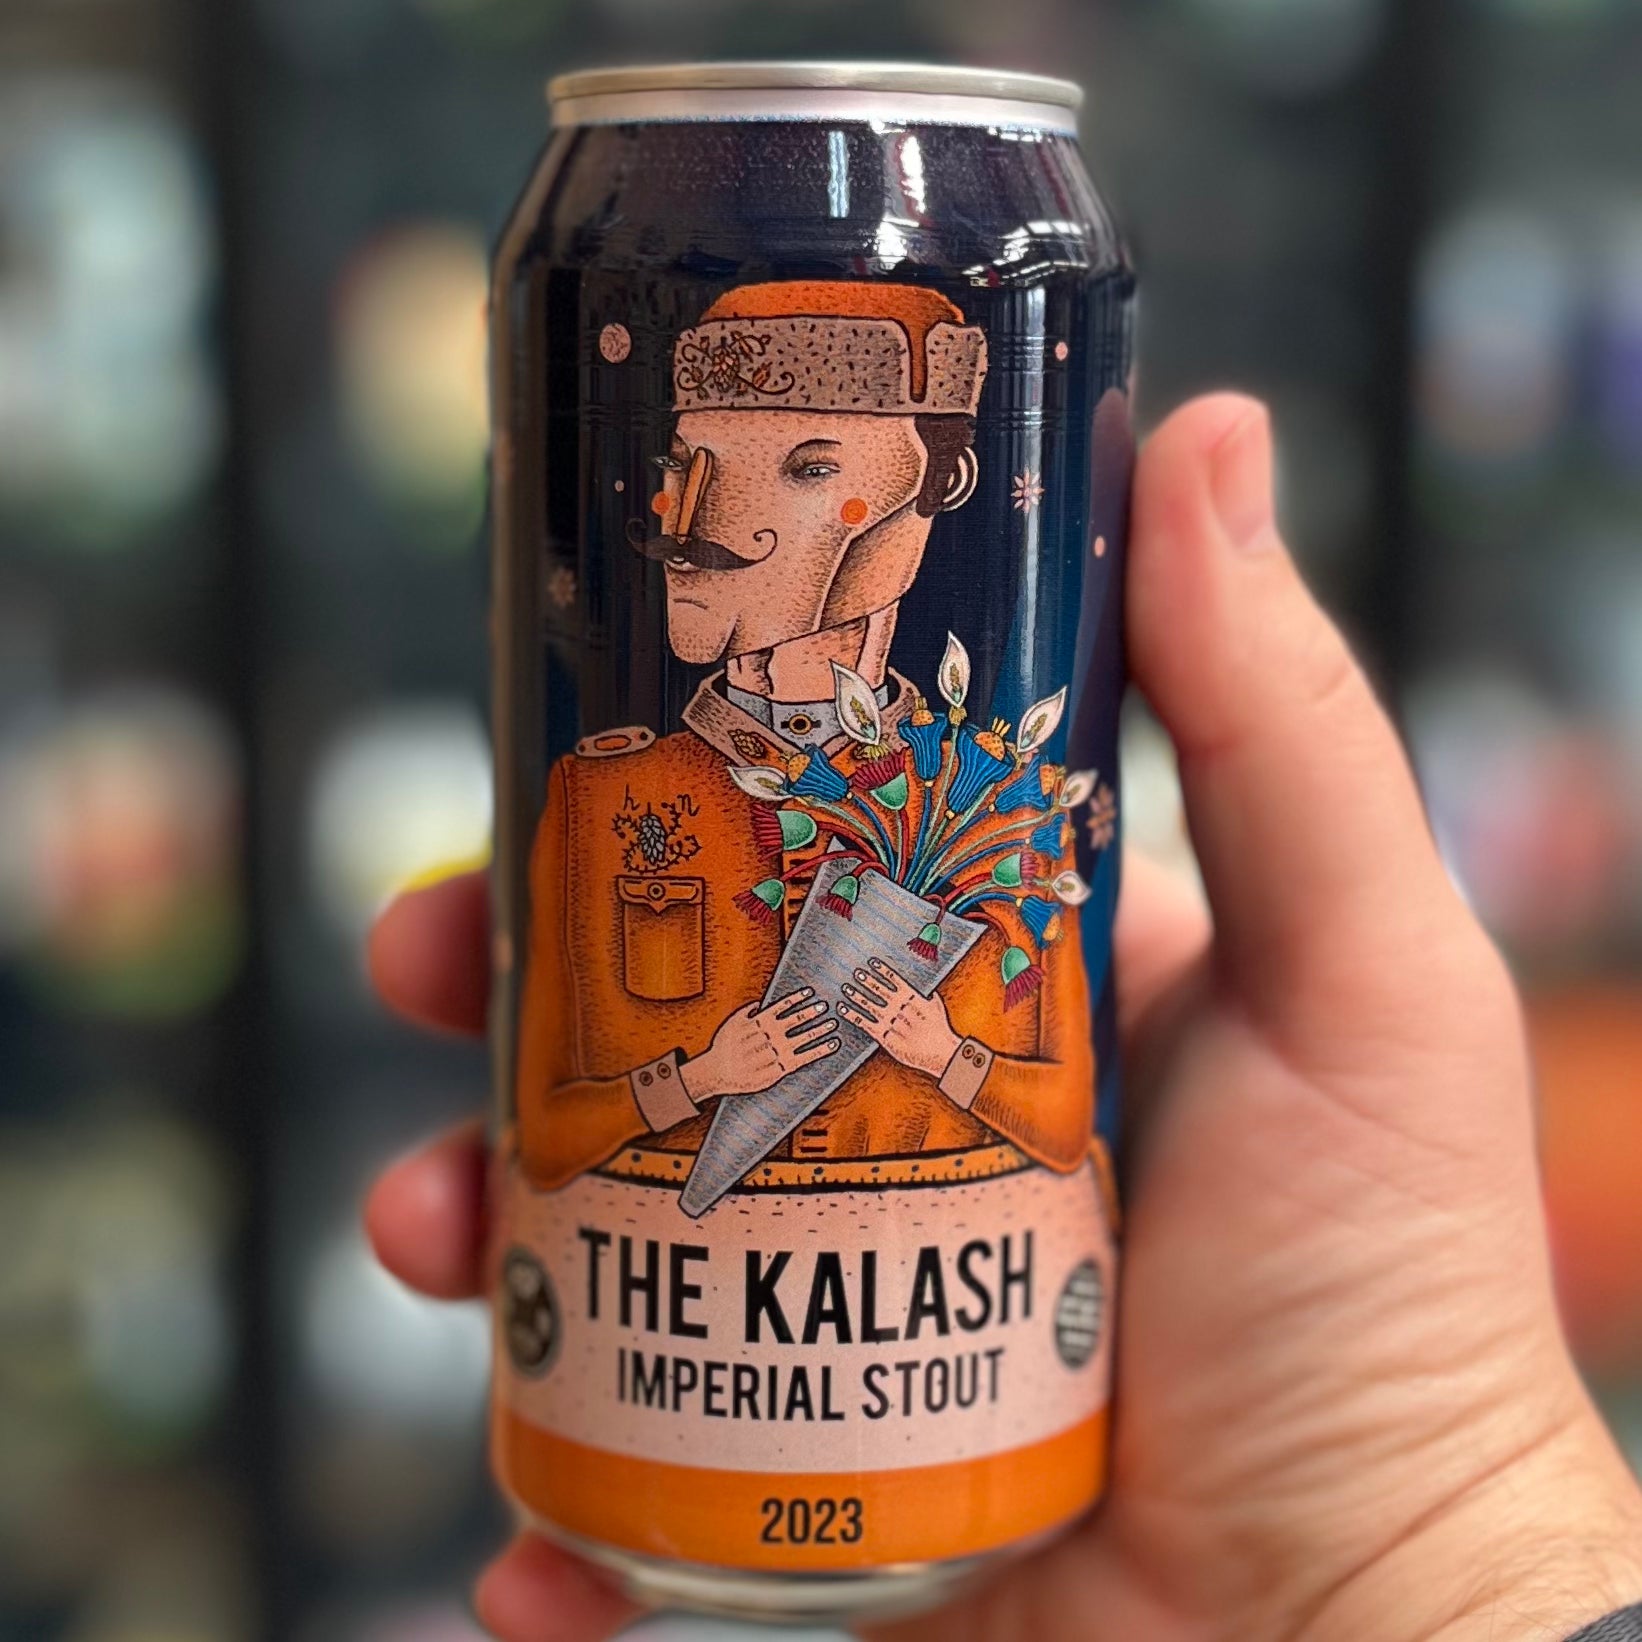 The Kalash Imperial Stout